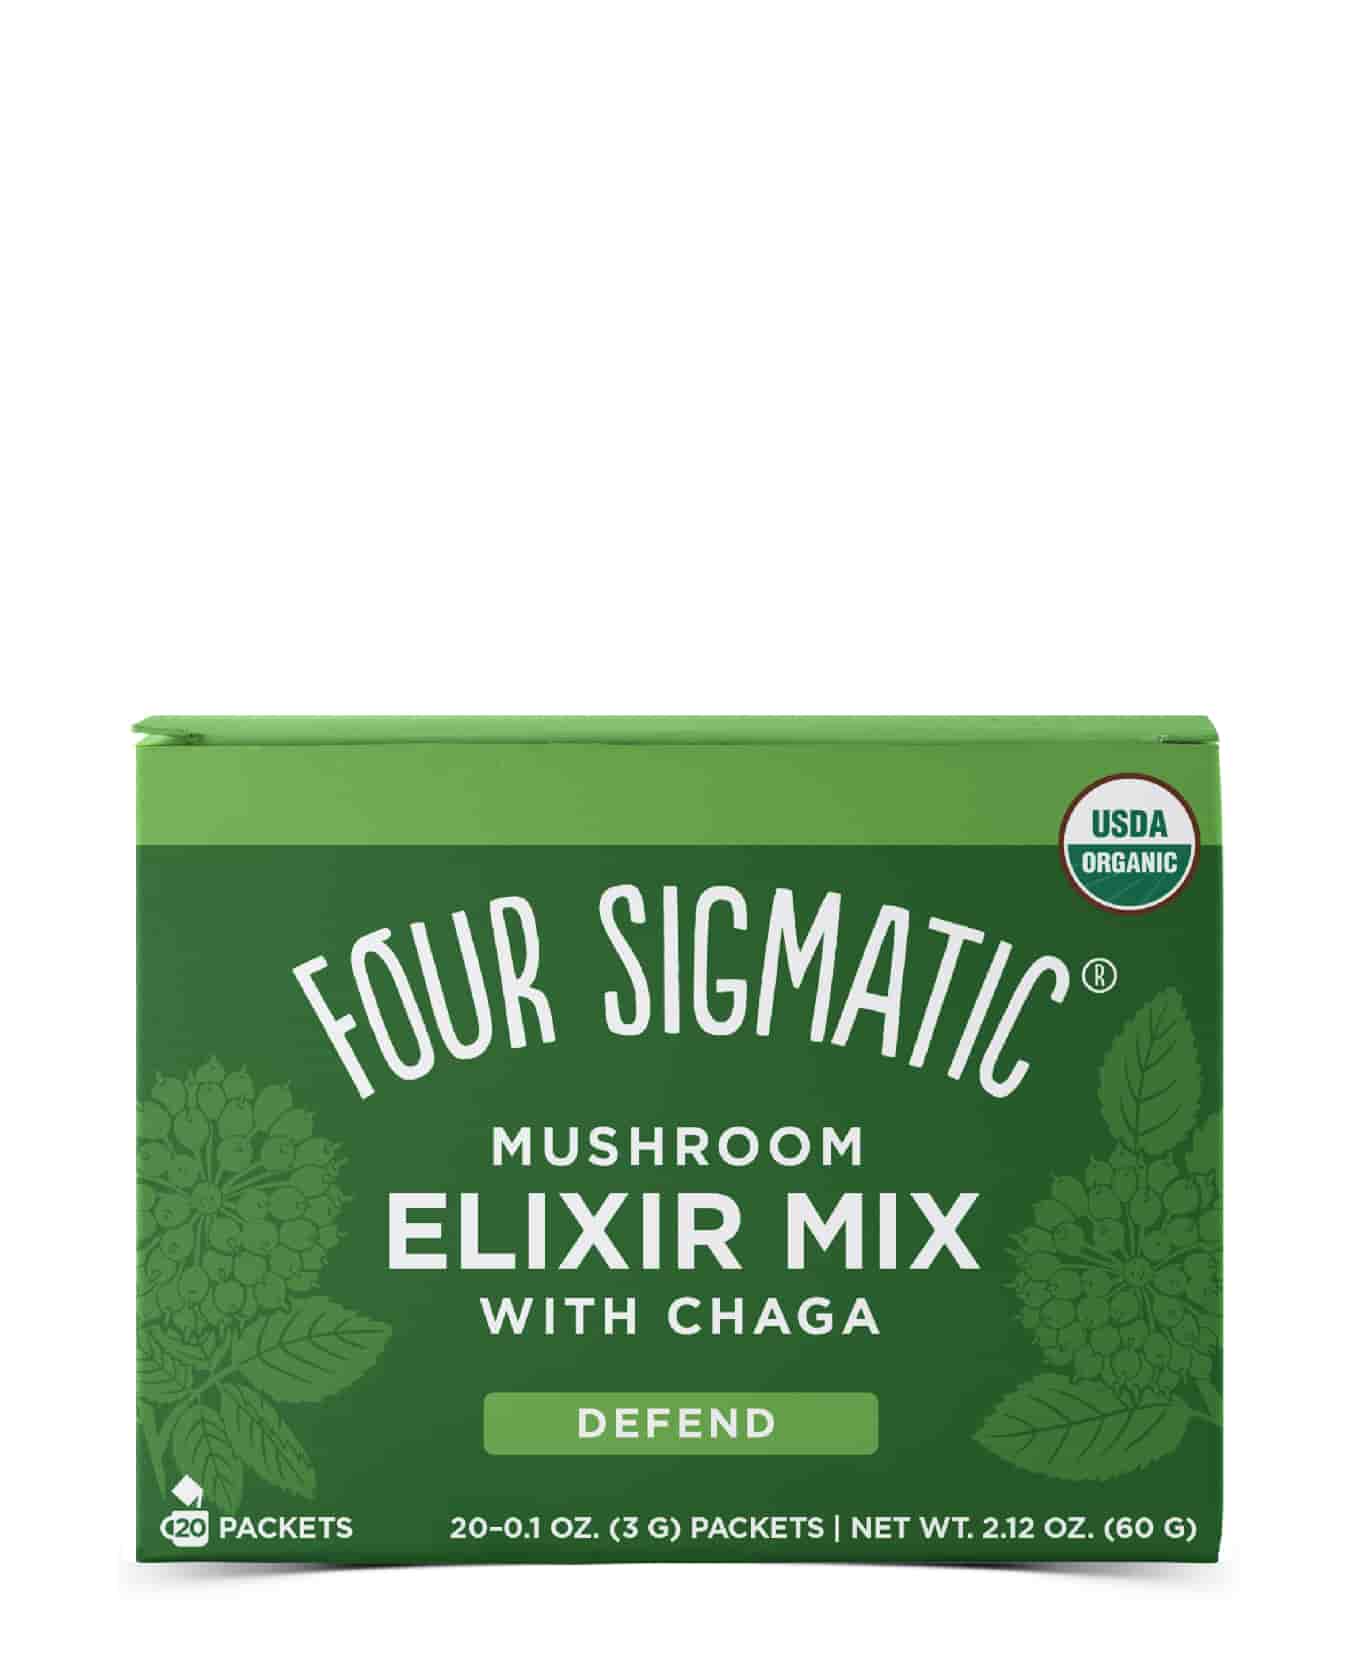 Buy Four Sigmatic Chaga Mushroom Elixir Mix at LiveHelfi